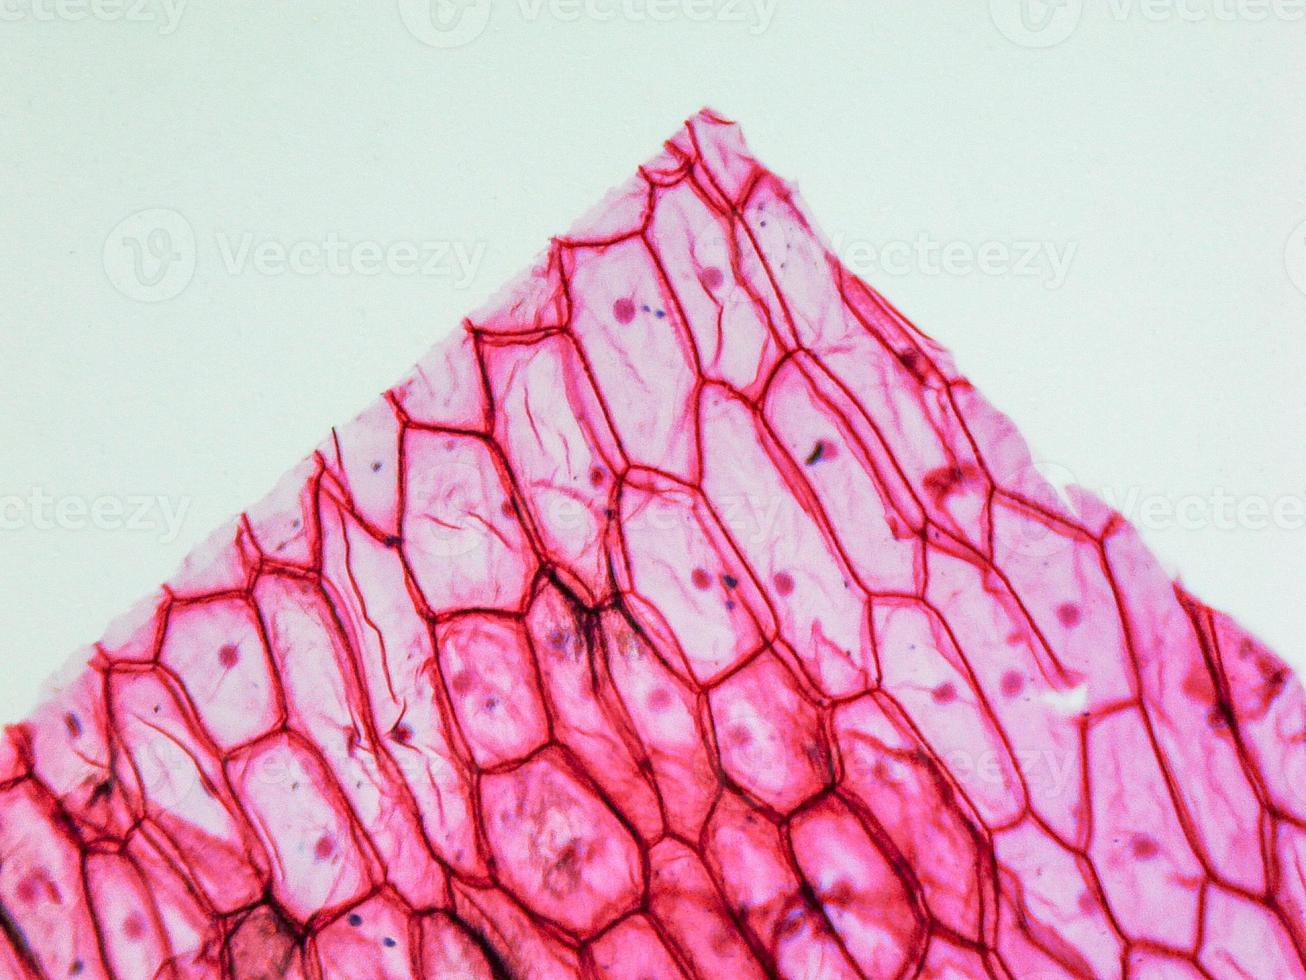 Onion epidermus micrograph photo